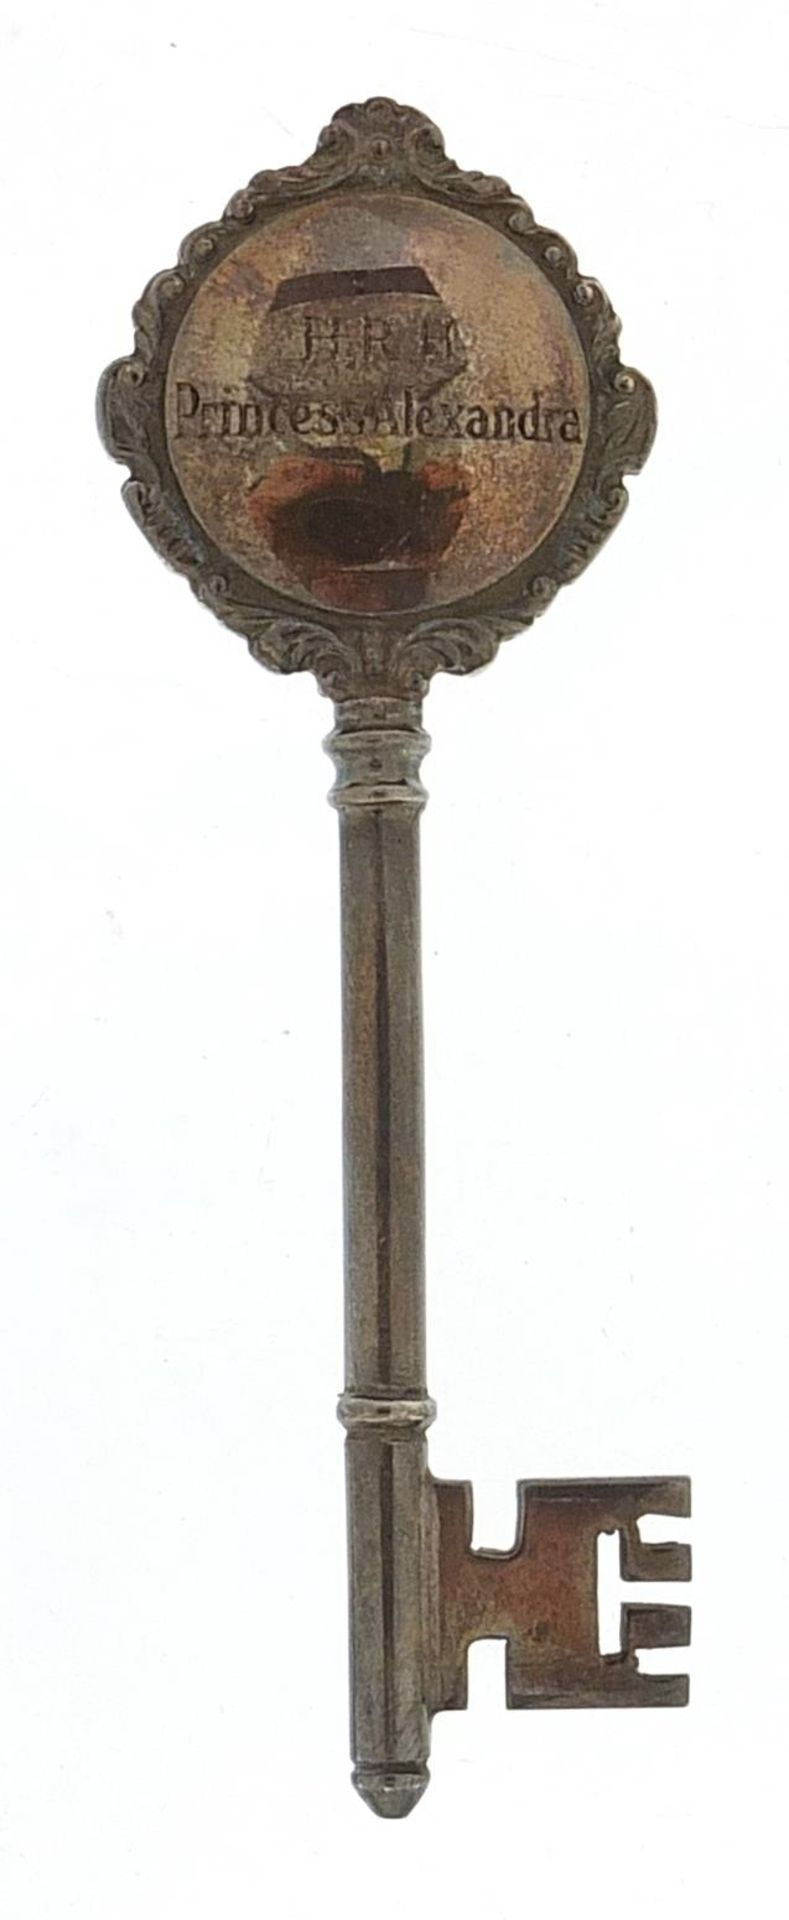 Deakin & Francis Ltd, Royal interest silver key with presentation box engraved HRH Princess